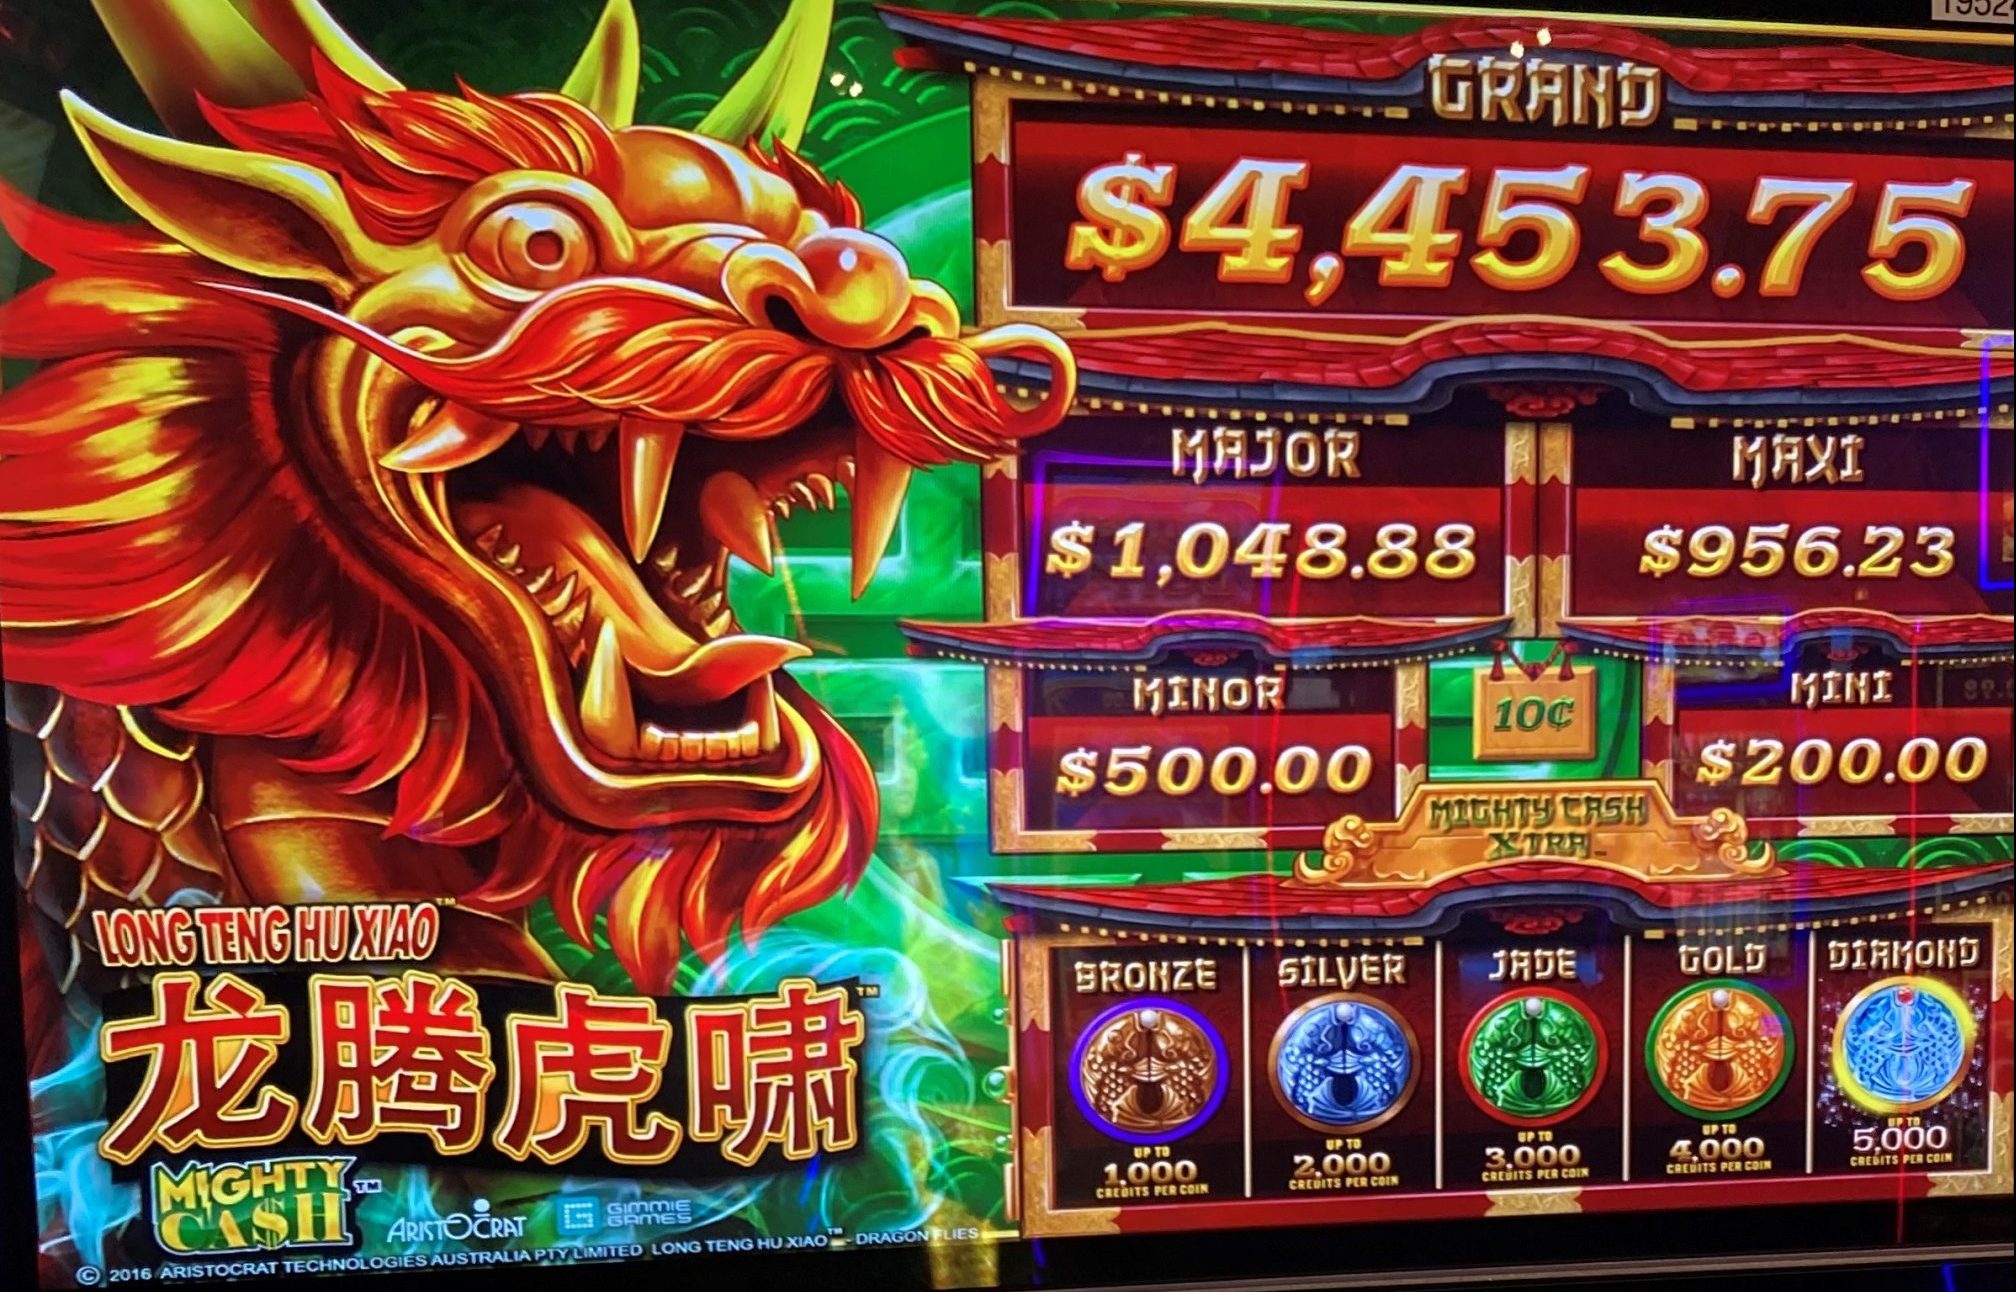 progressive slot machine with cash prizes, $4,453.75 grand jackpot